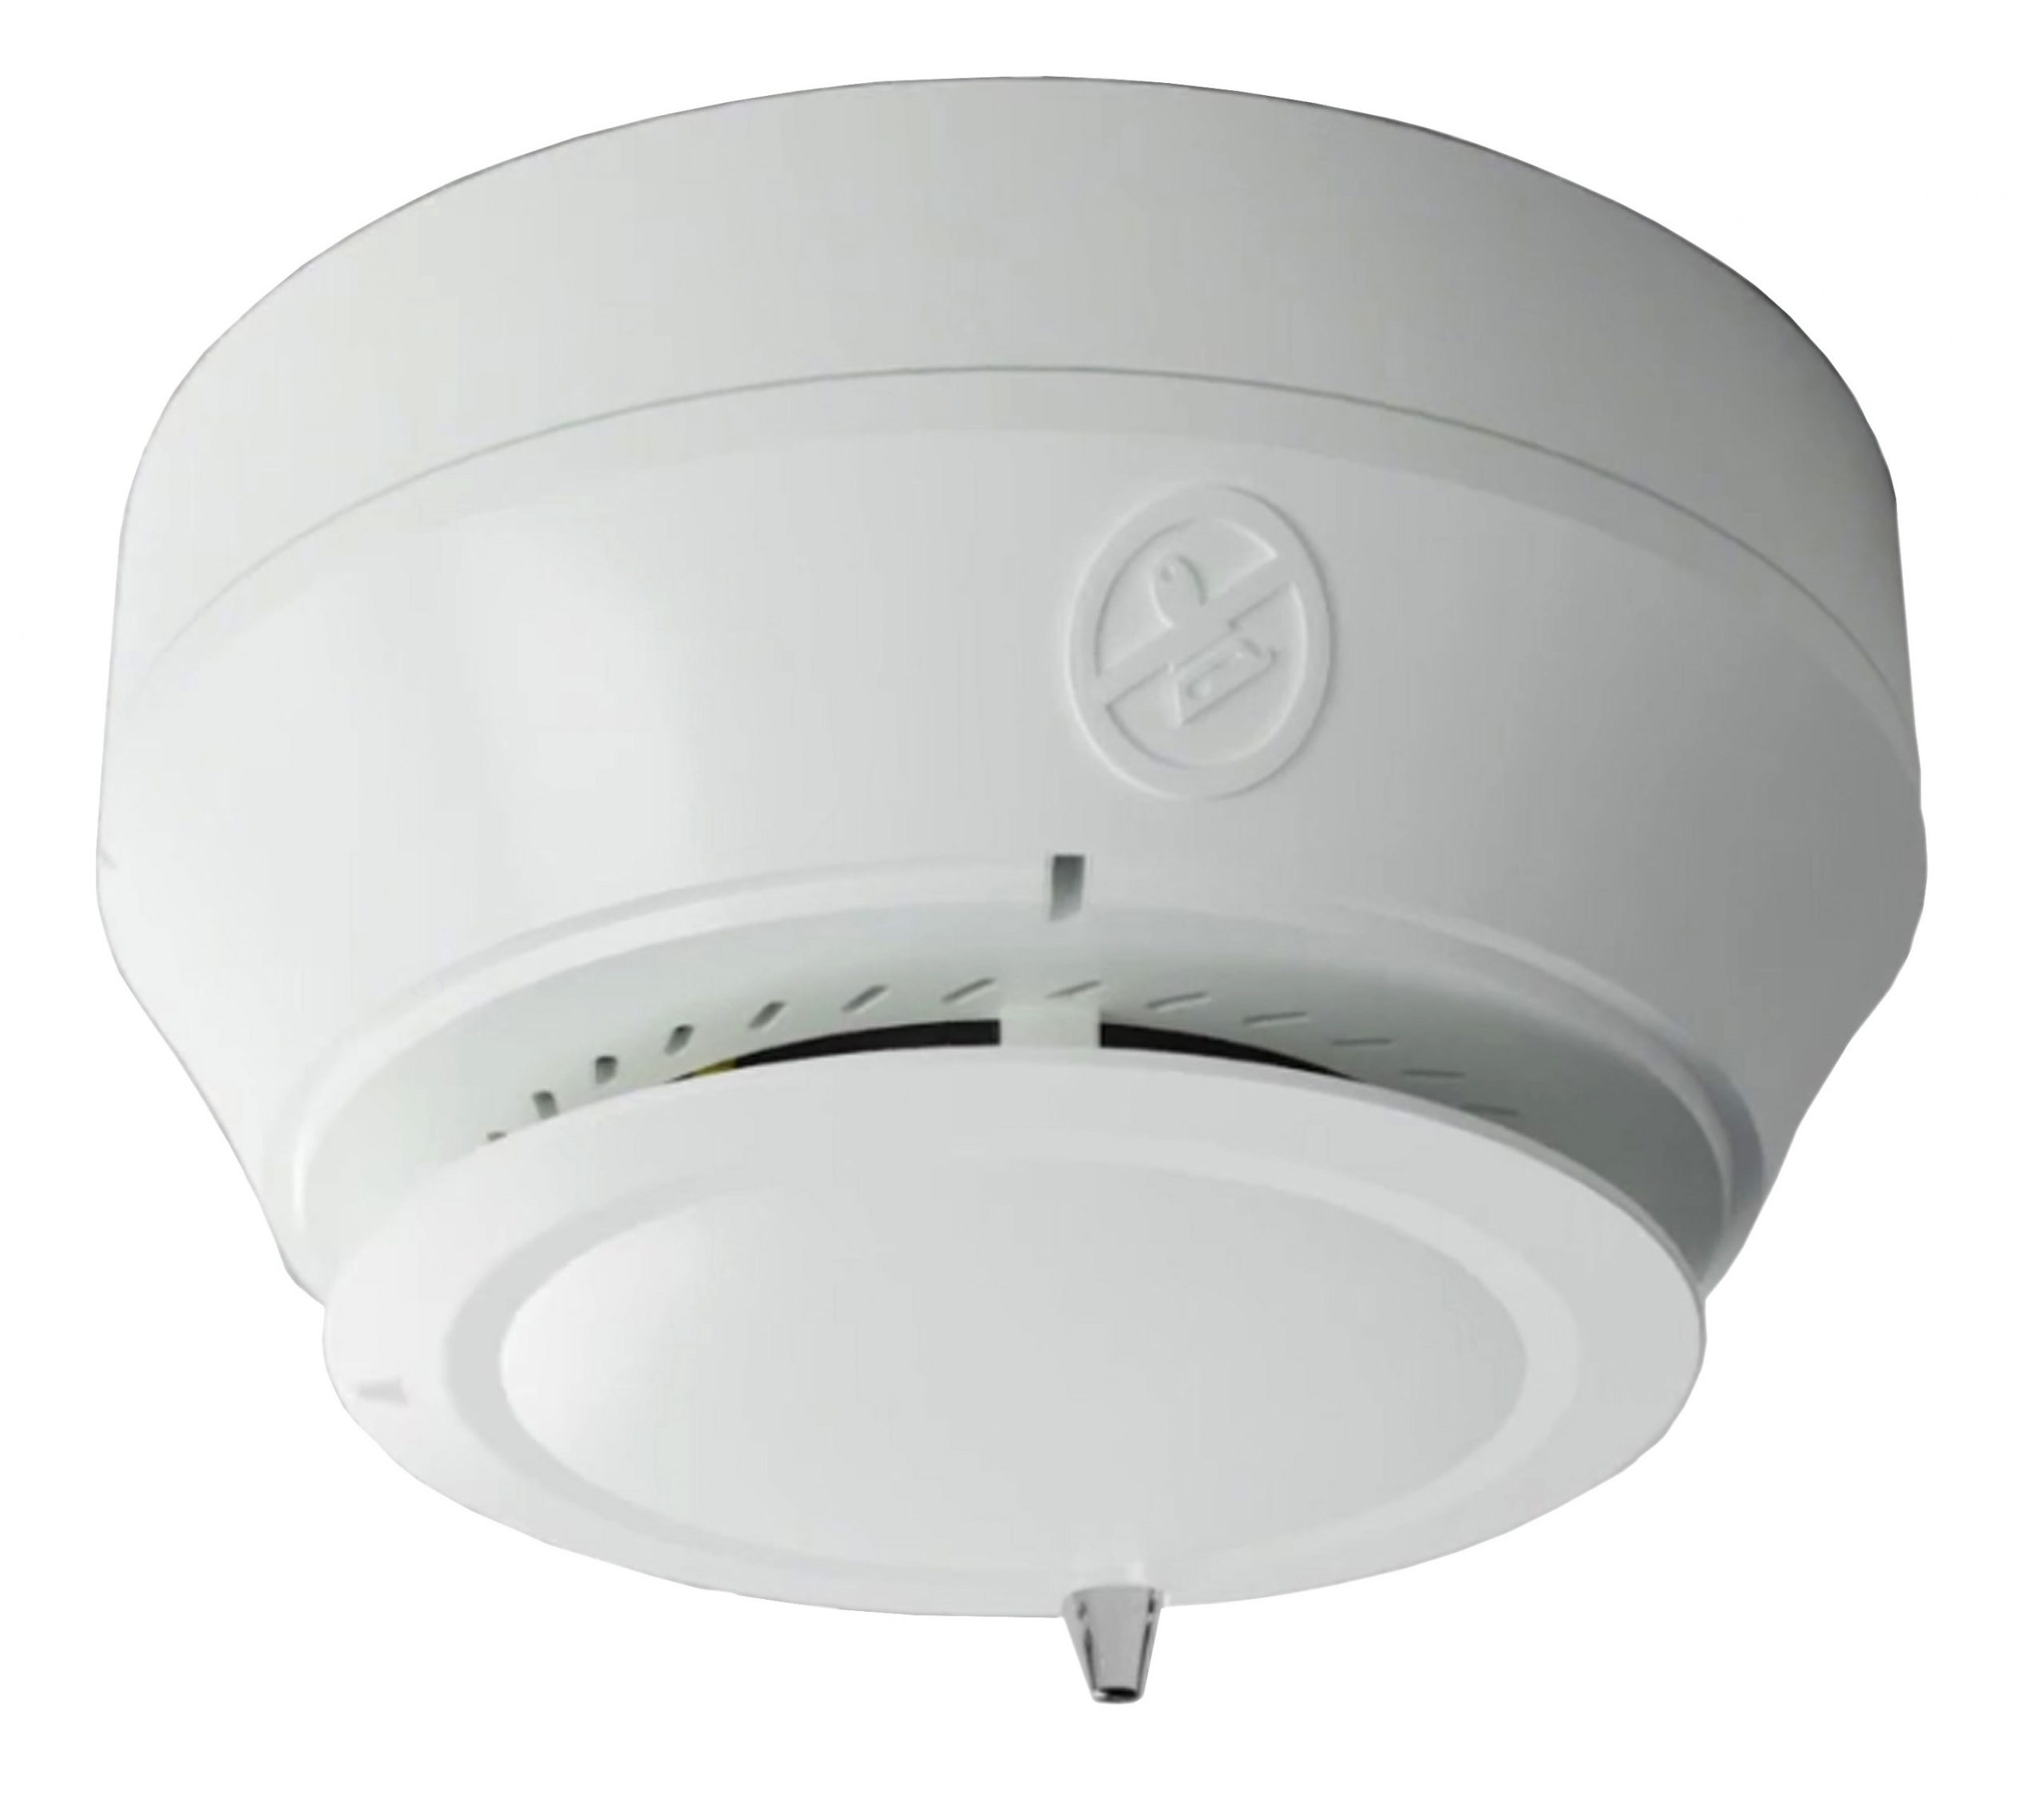 Notifier FSP-951 Fire Alarm  Smoke Detector  Brand New 